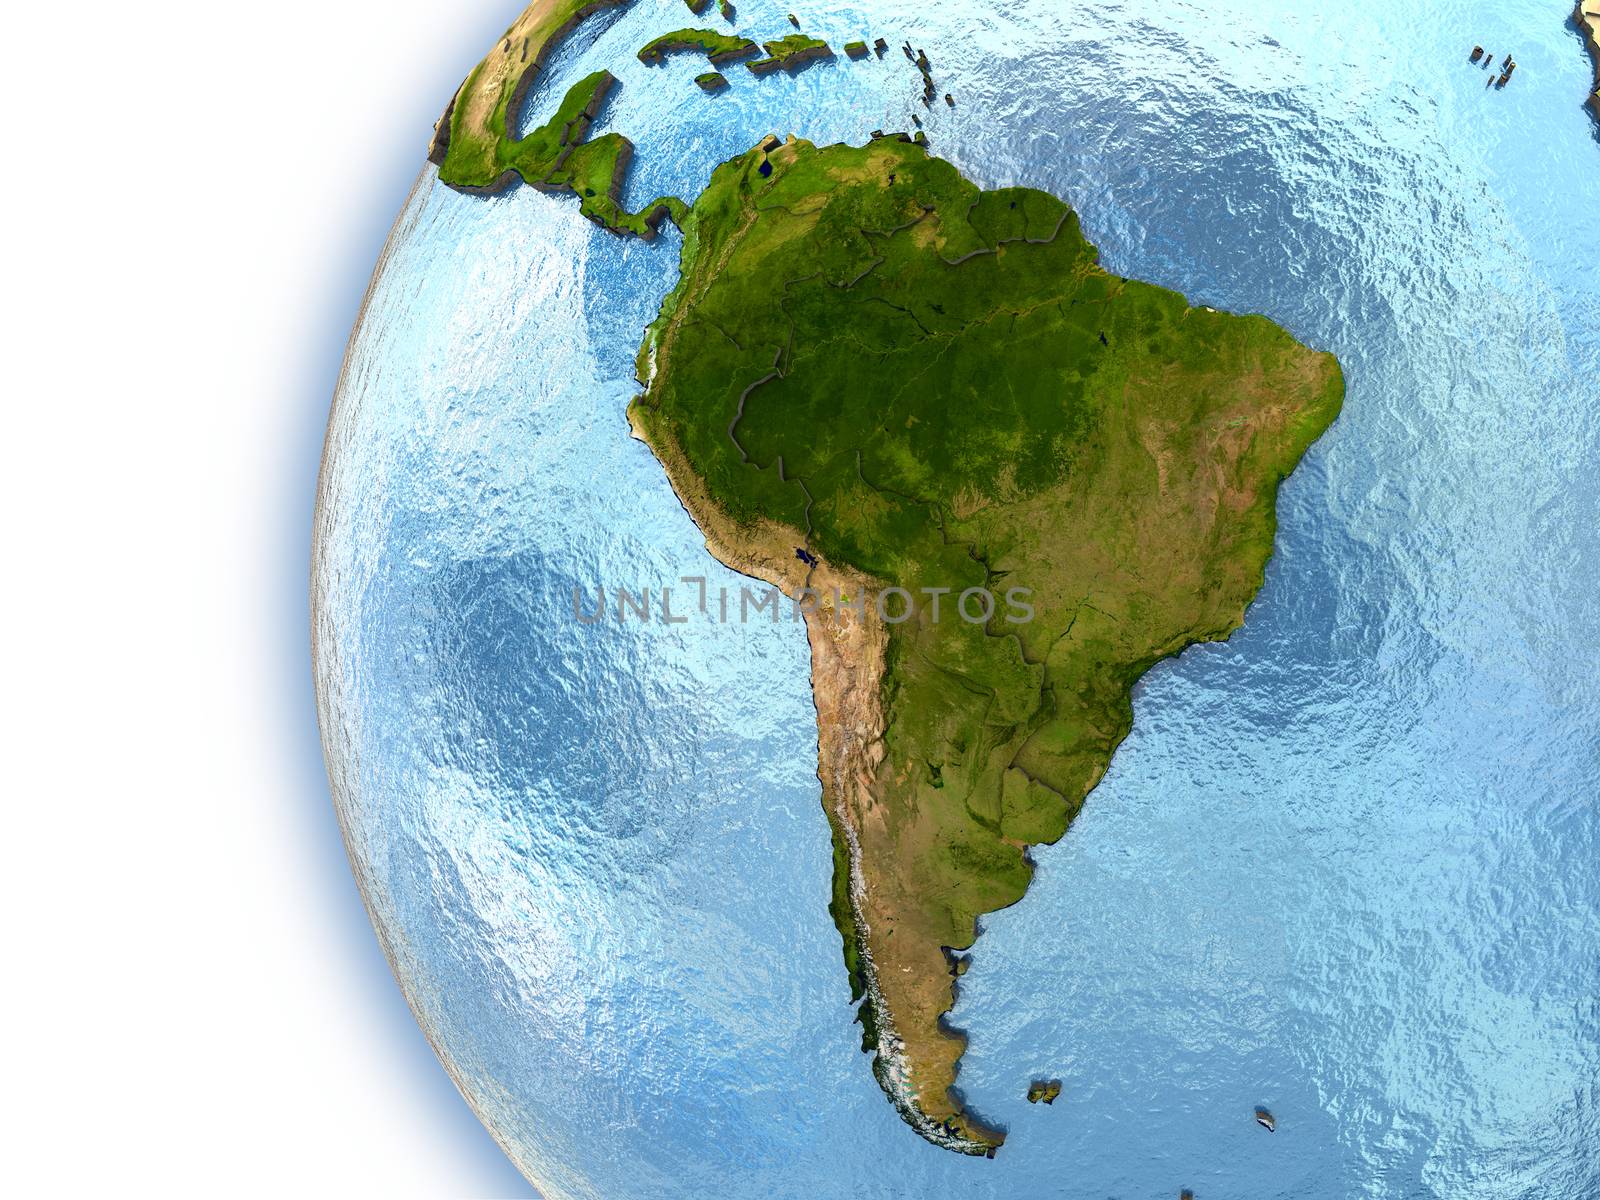 South America by Harvepino